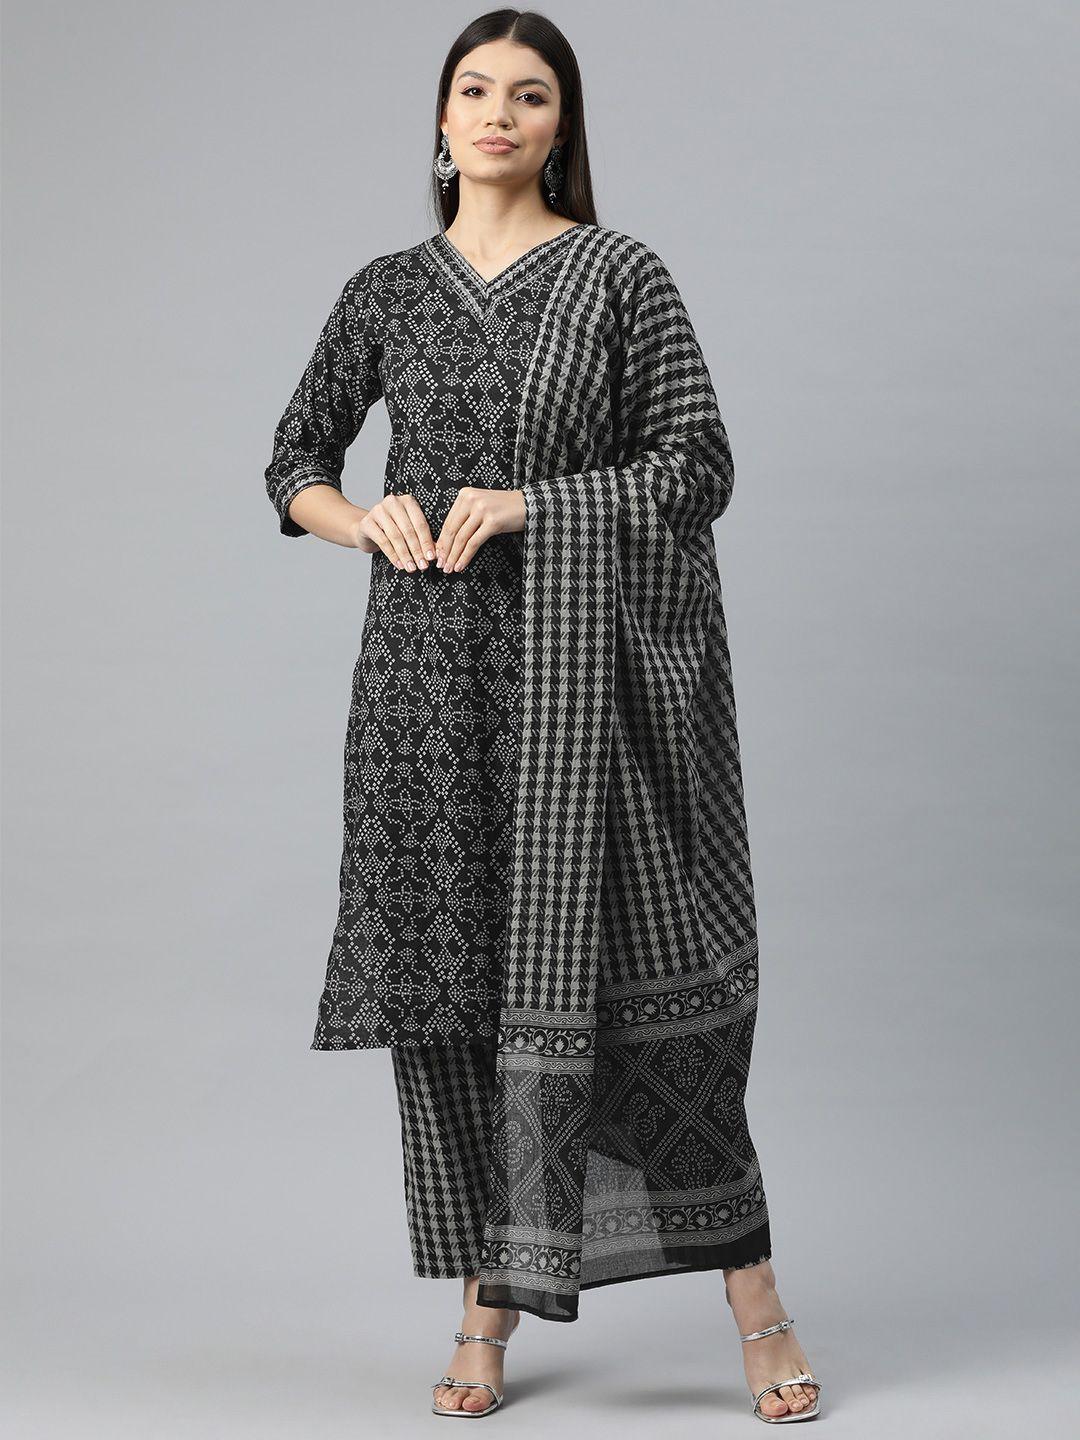 readiprint fashions women bandhani print thread work pure cotton kurta trousers & dupatta